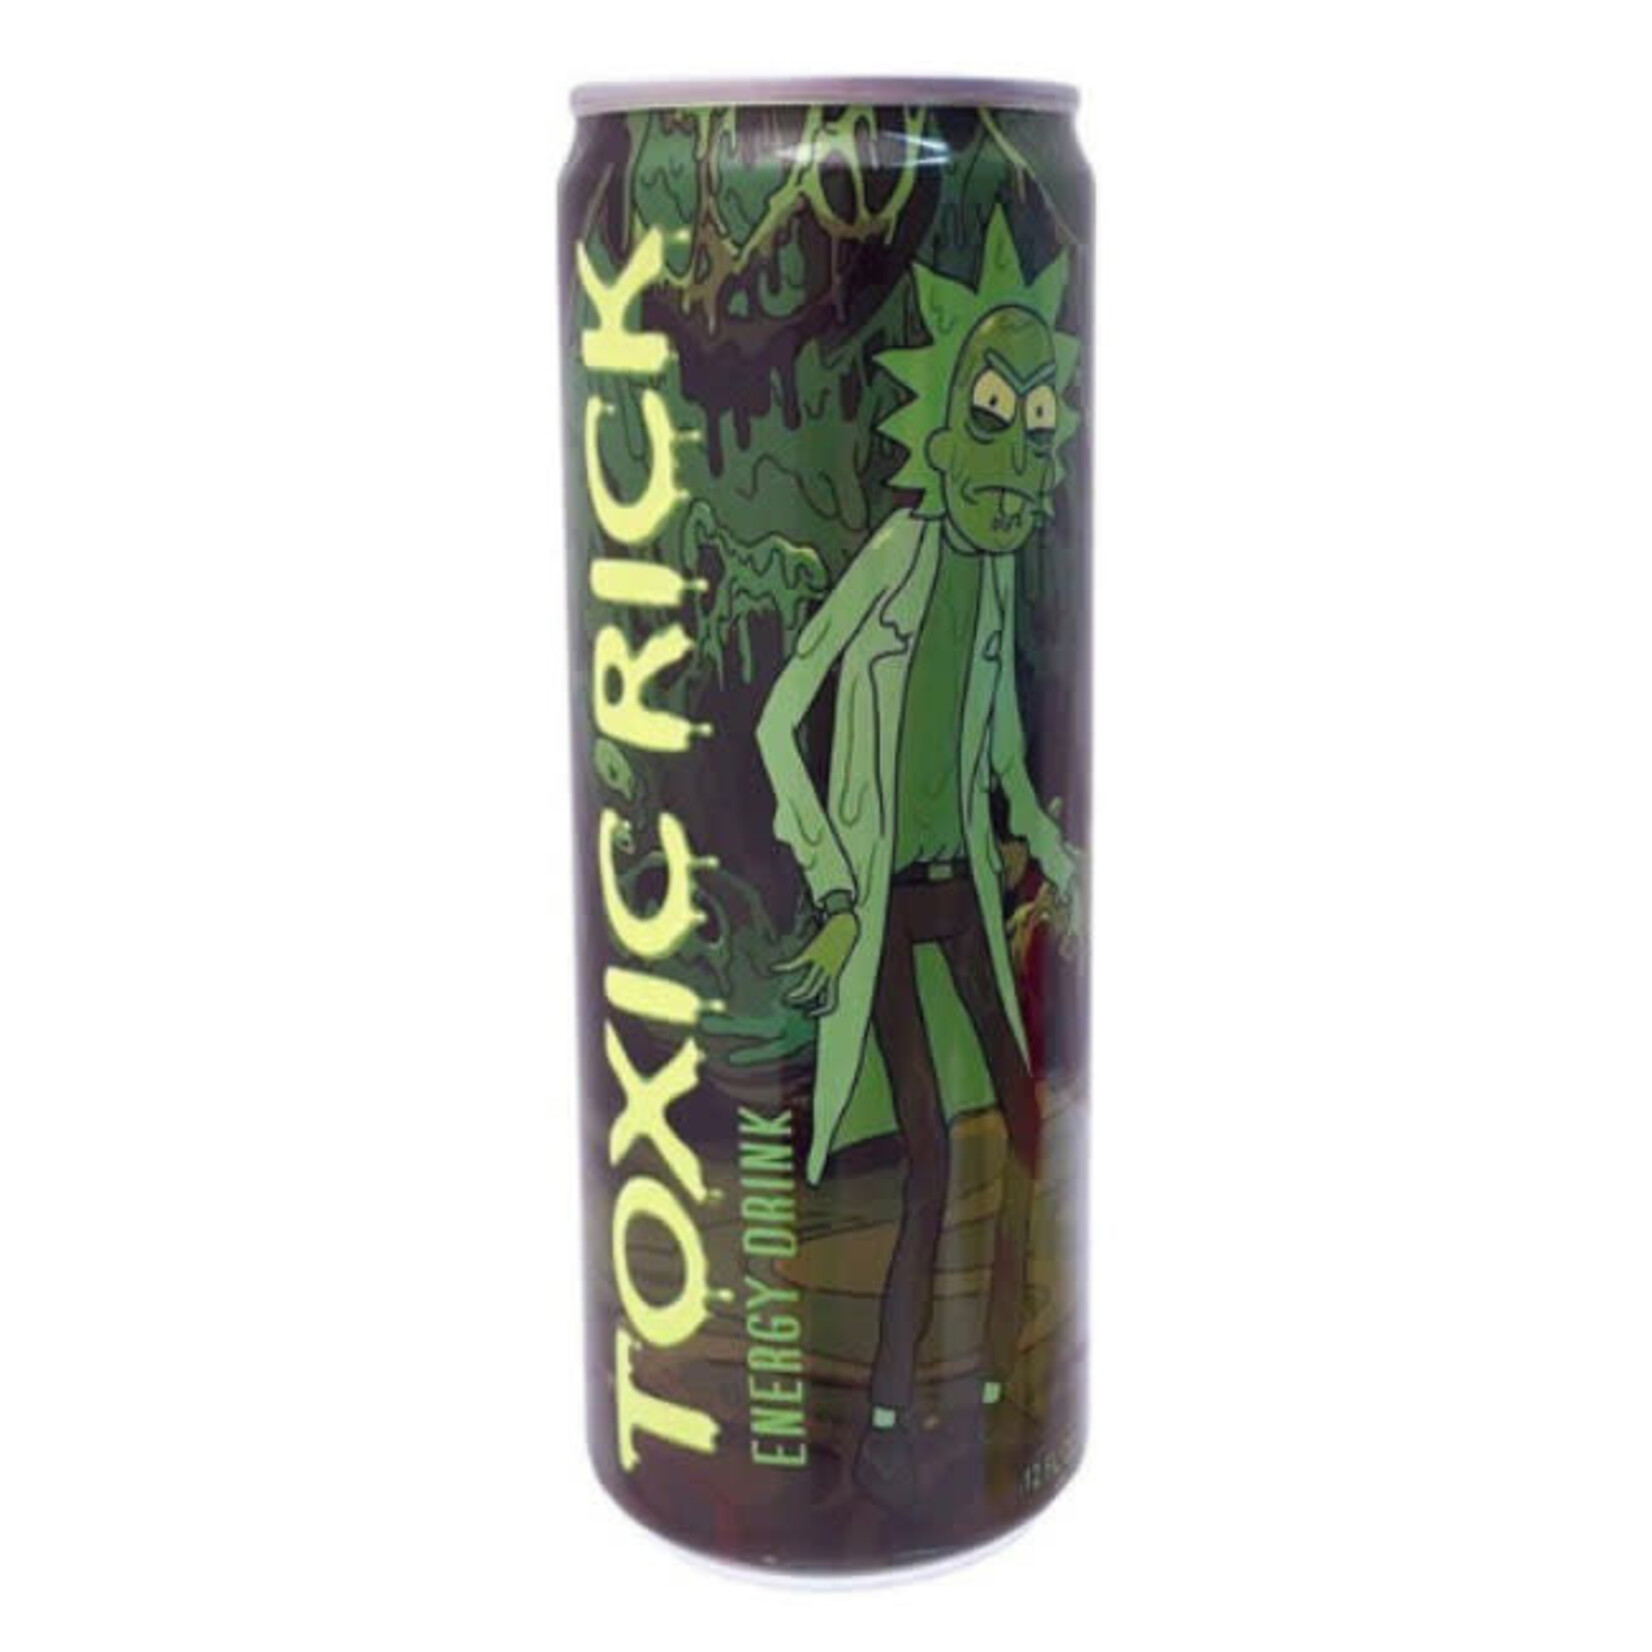 Grandpa Joes Toxic Rick Energy Drink